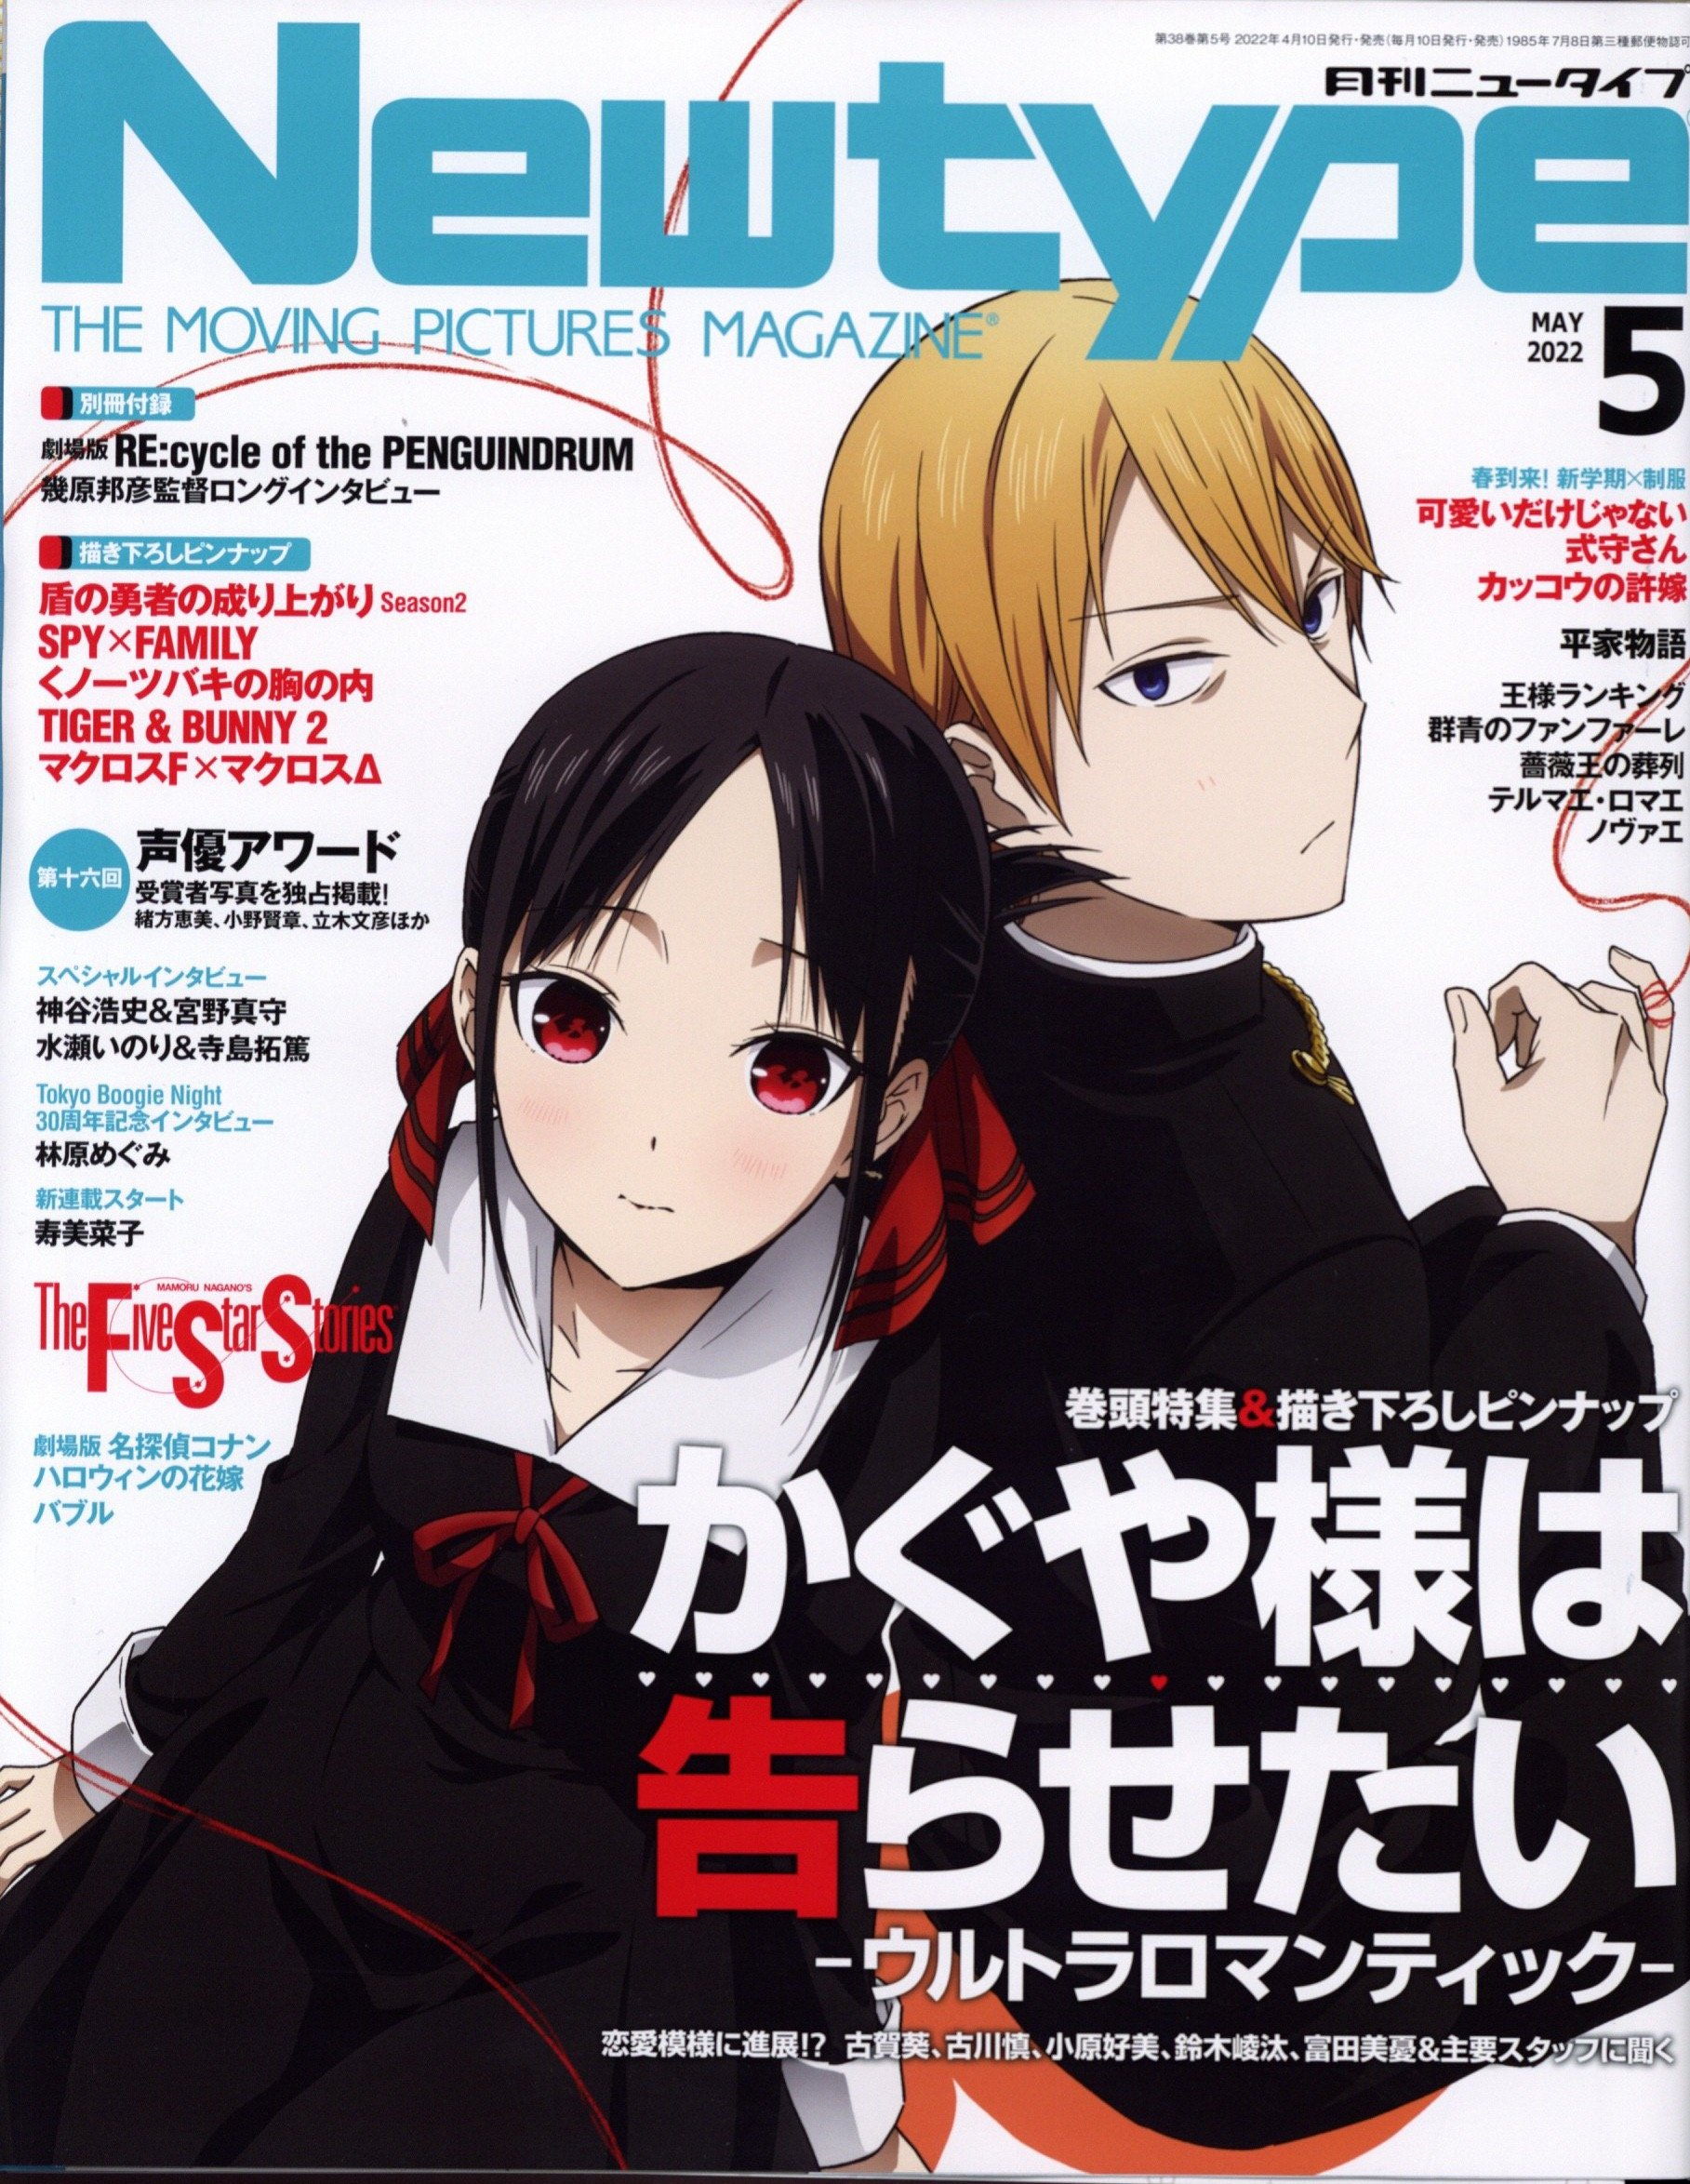 Anime Trending Newtype Magazine February 2021 Issue Cover, 45% OFF